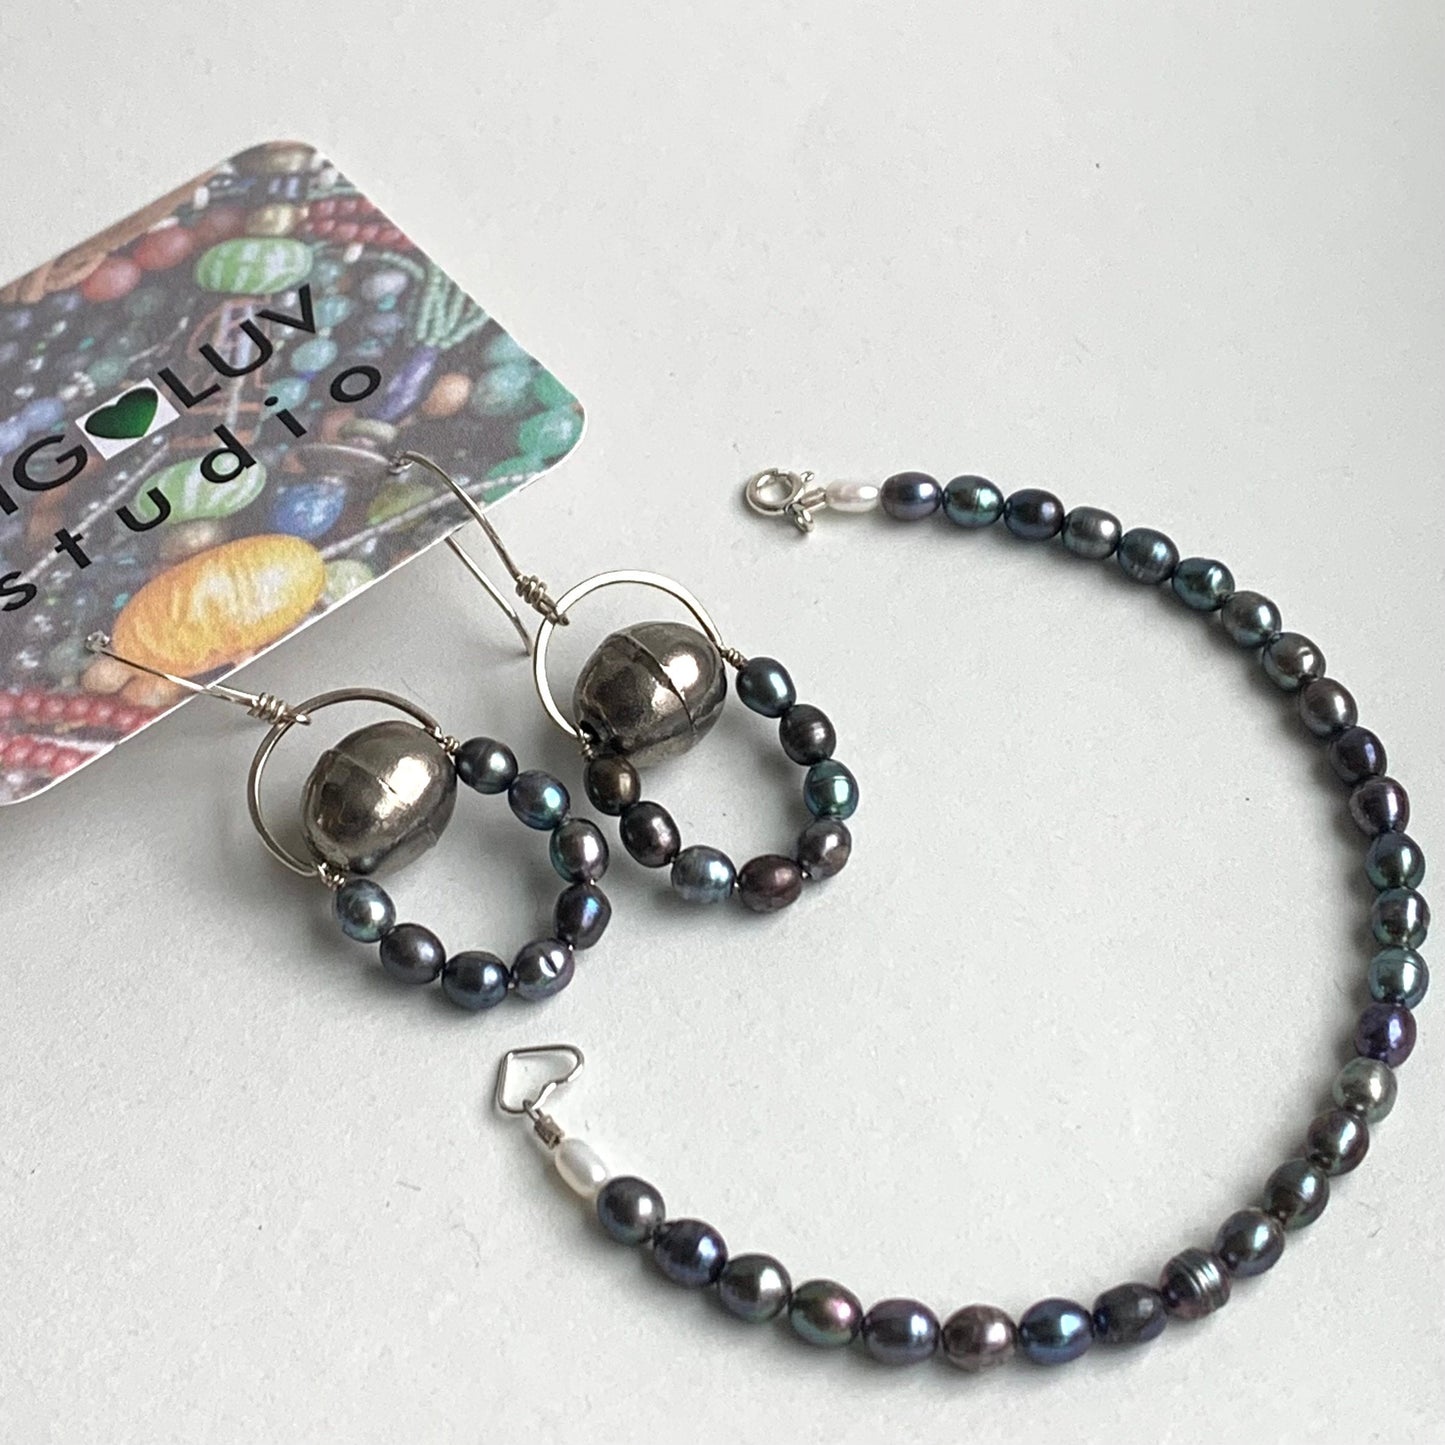 Freshwater pearl bracelet - pearl bead bracelet with clasp - gifts for moms - handmade womens jewelry - earthy, feminine, boho style